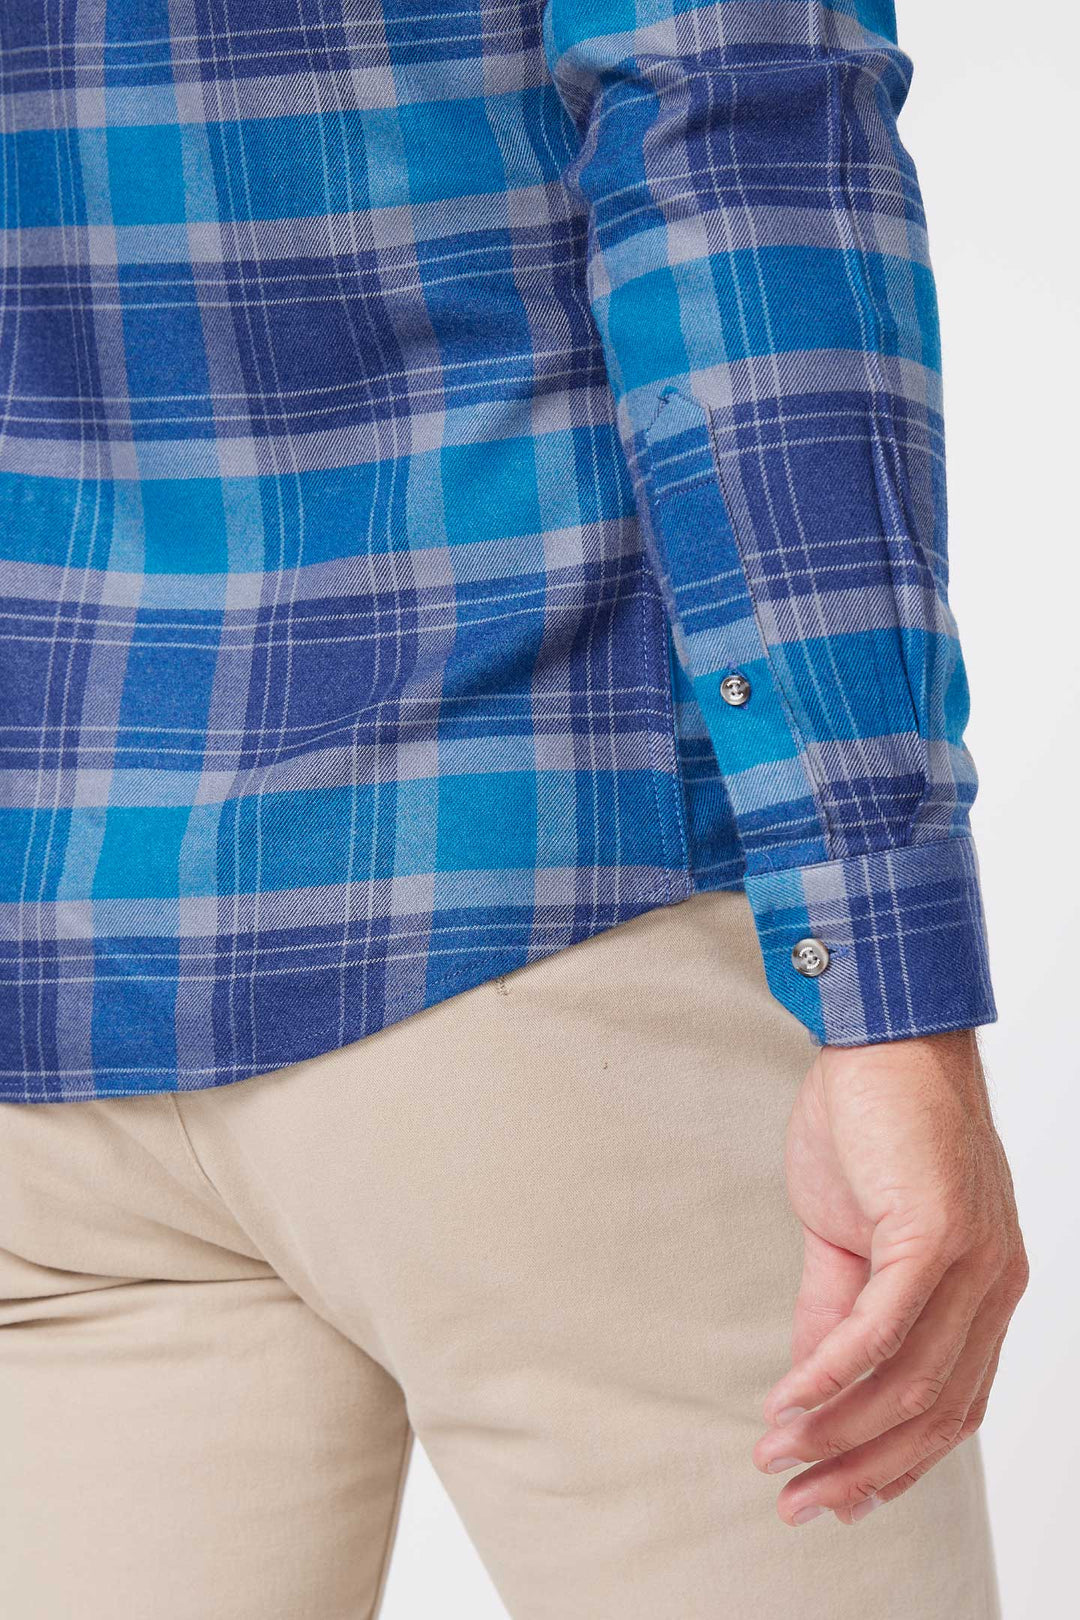 Buy Dawn Flannel Button-Down Shirt for Short Men | Ash & Erie   Flannel Everyday Shirt